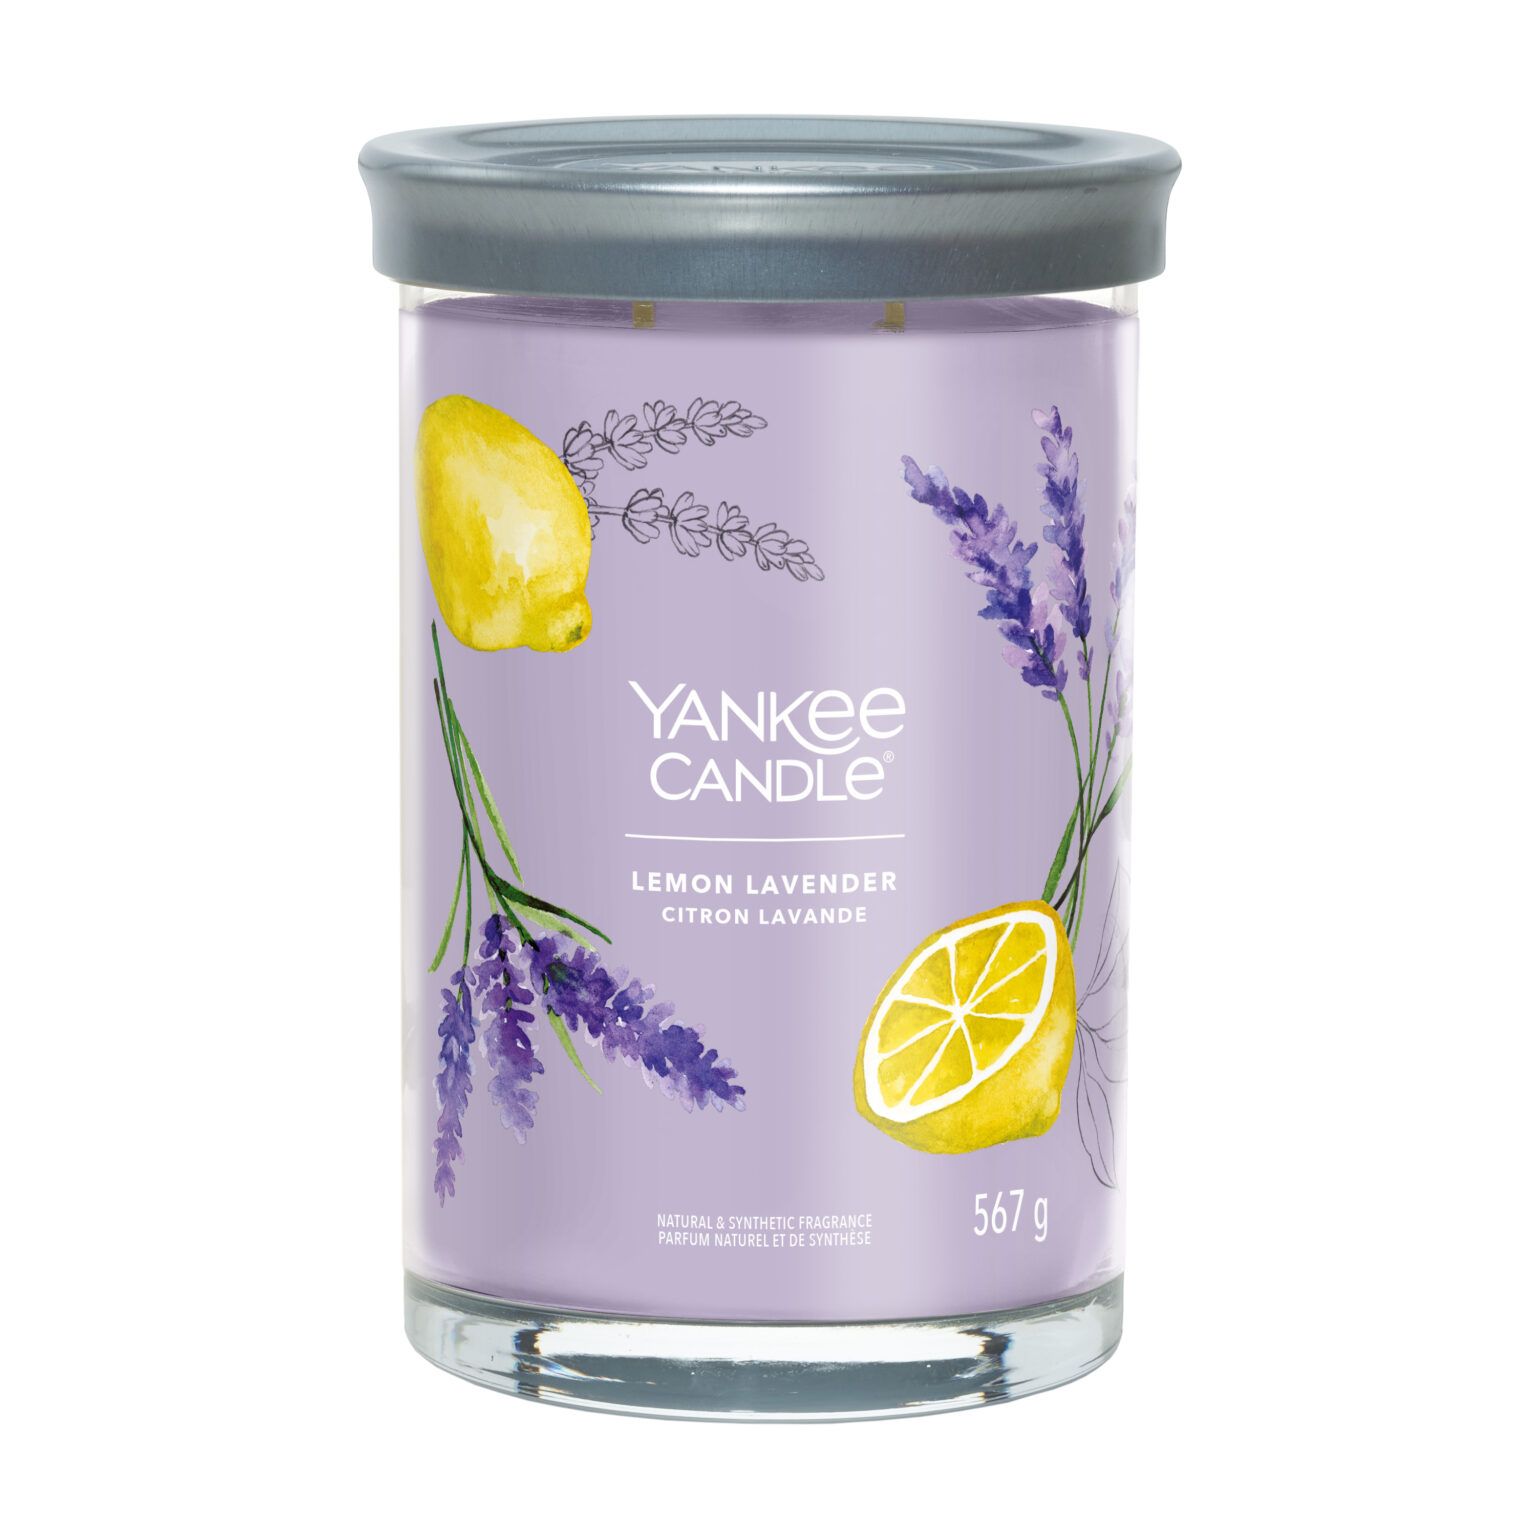 Lemon Lavender Signature Large Tumbler Yankee Candle Geurkaars